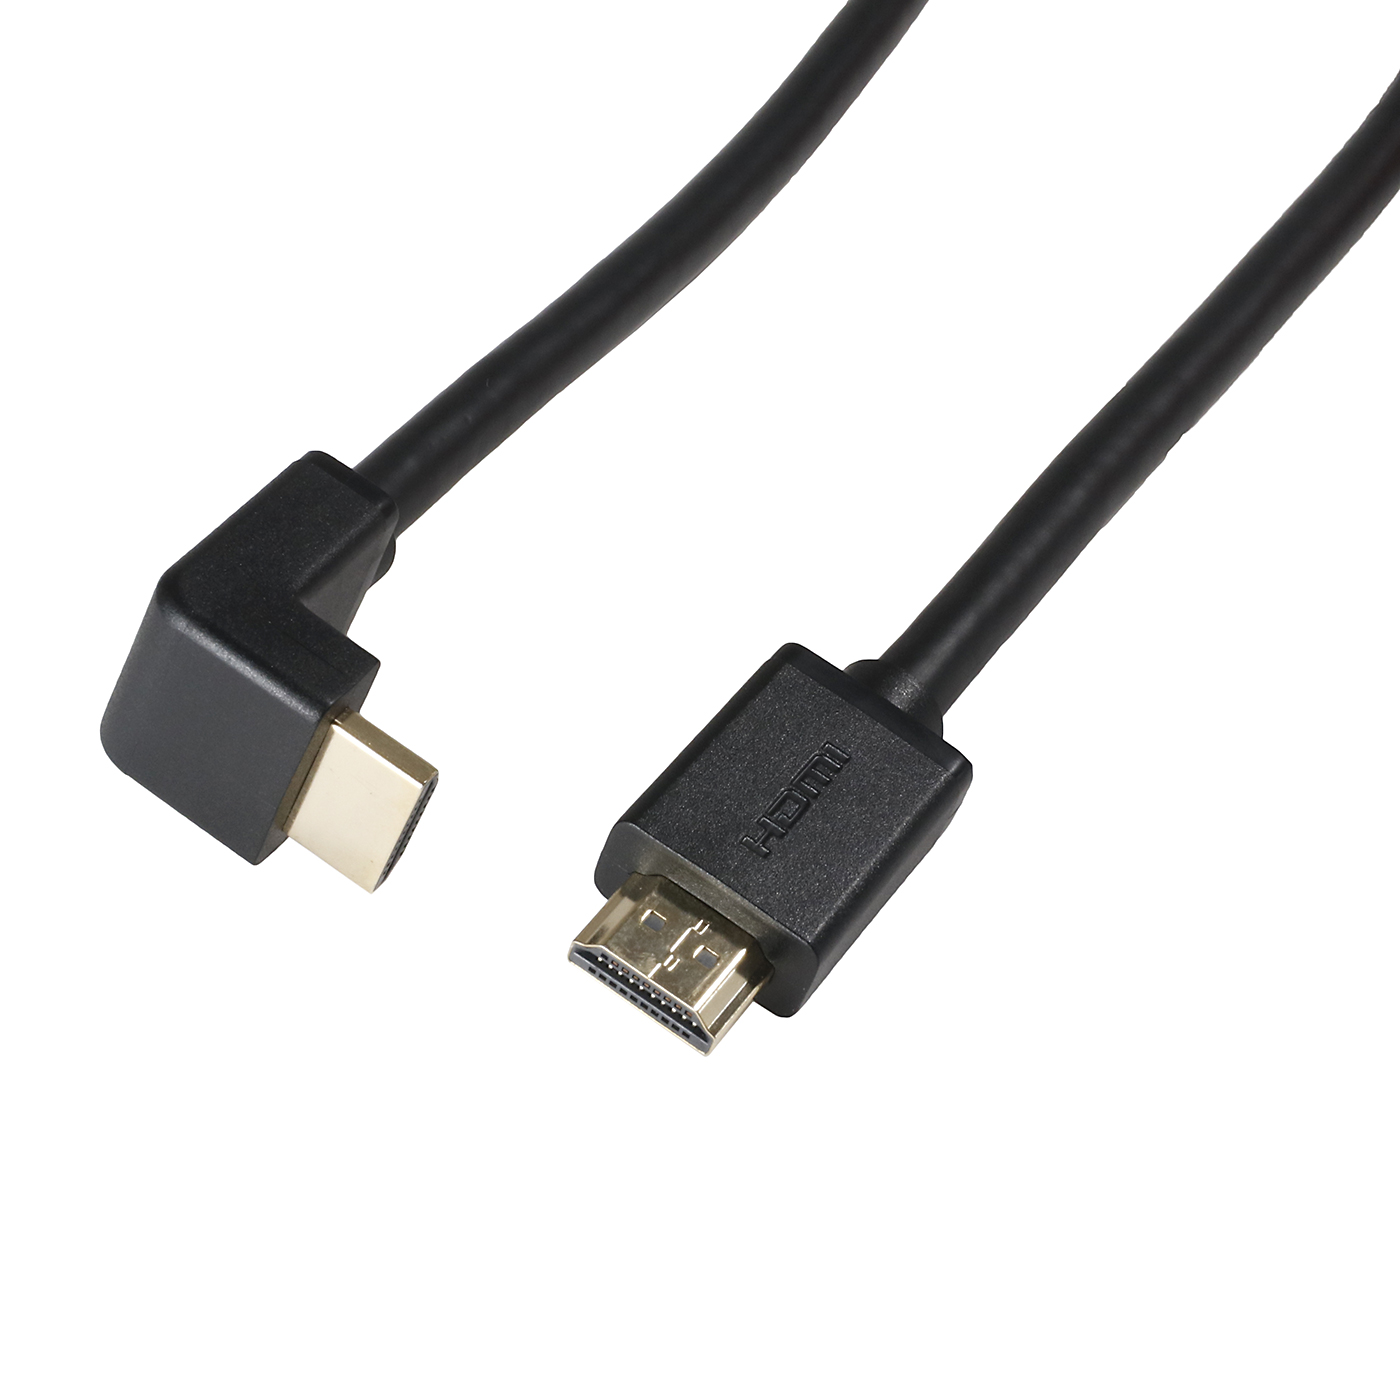 Switchドック互換 USB-TypeC HDMI 長さ2メートルケーブル SwitchOLED Windows Mac パソコン iPa